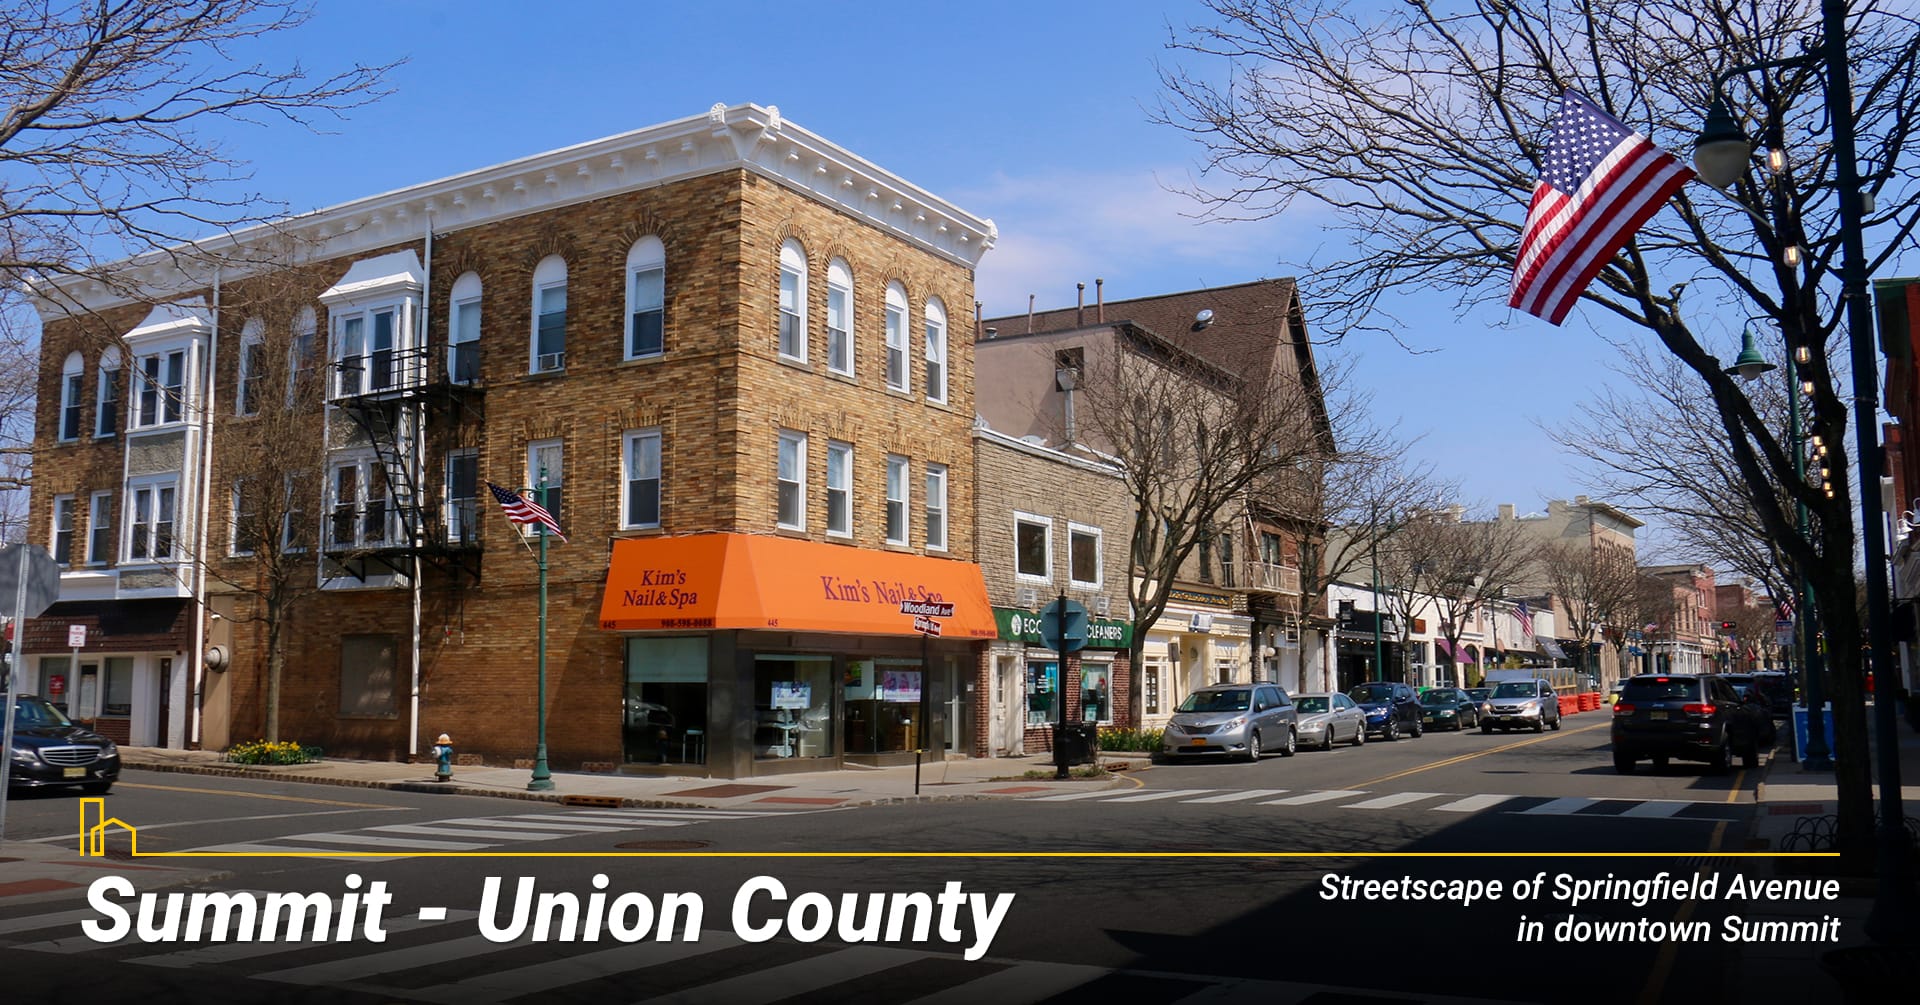 Summit - Union County